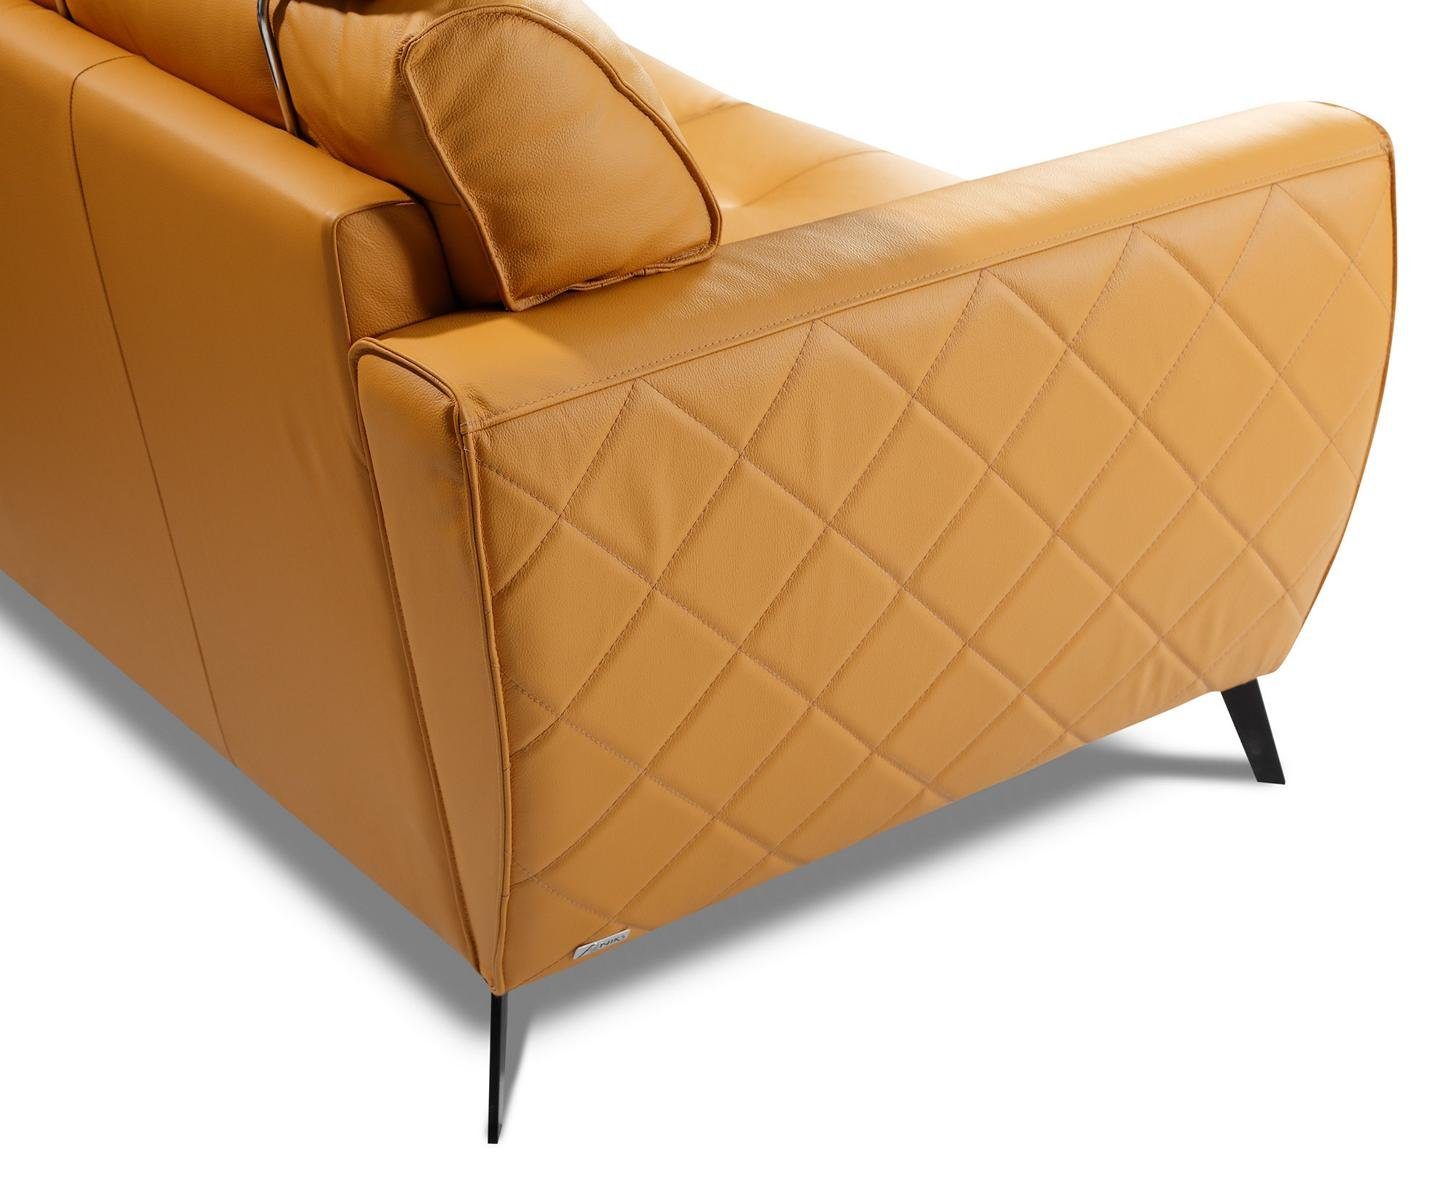 JVmoebel Wohnzimmer-Set, Leder Design Couch Sofa 2+1+1 Garnituren Sitz Gelb Polster Kunstleder